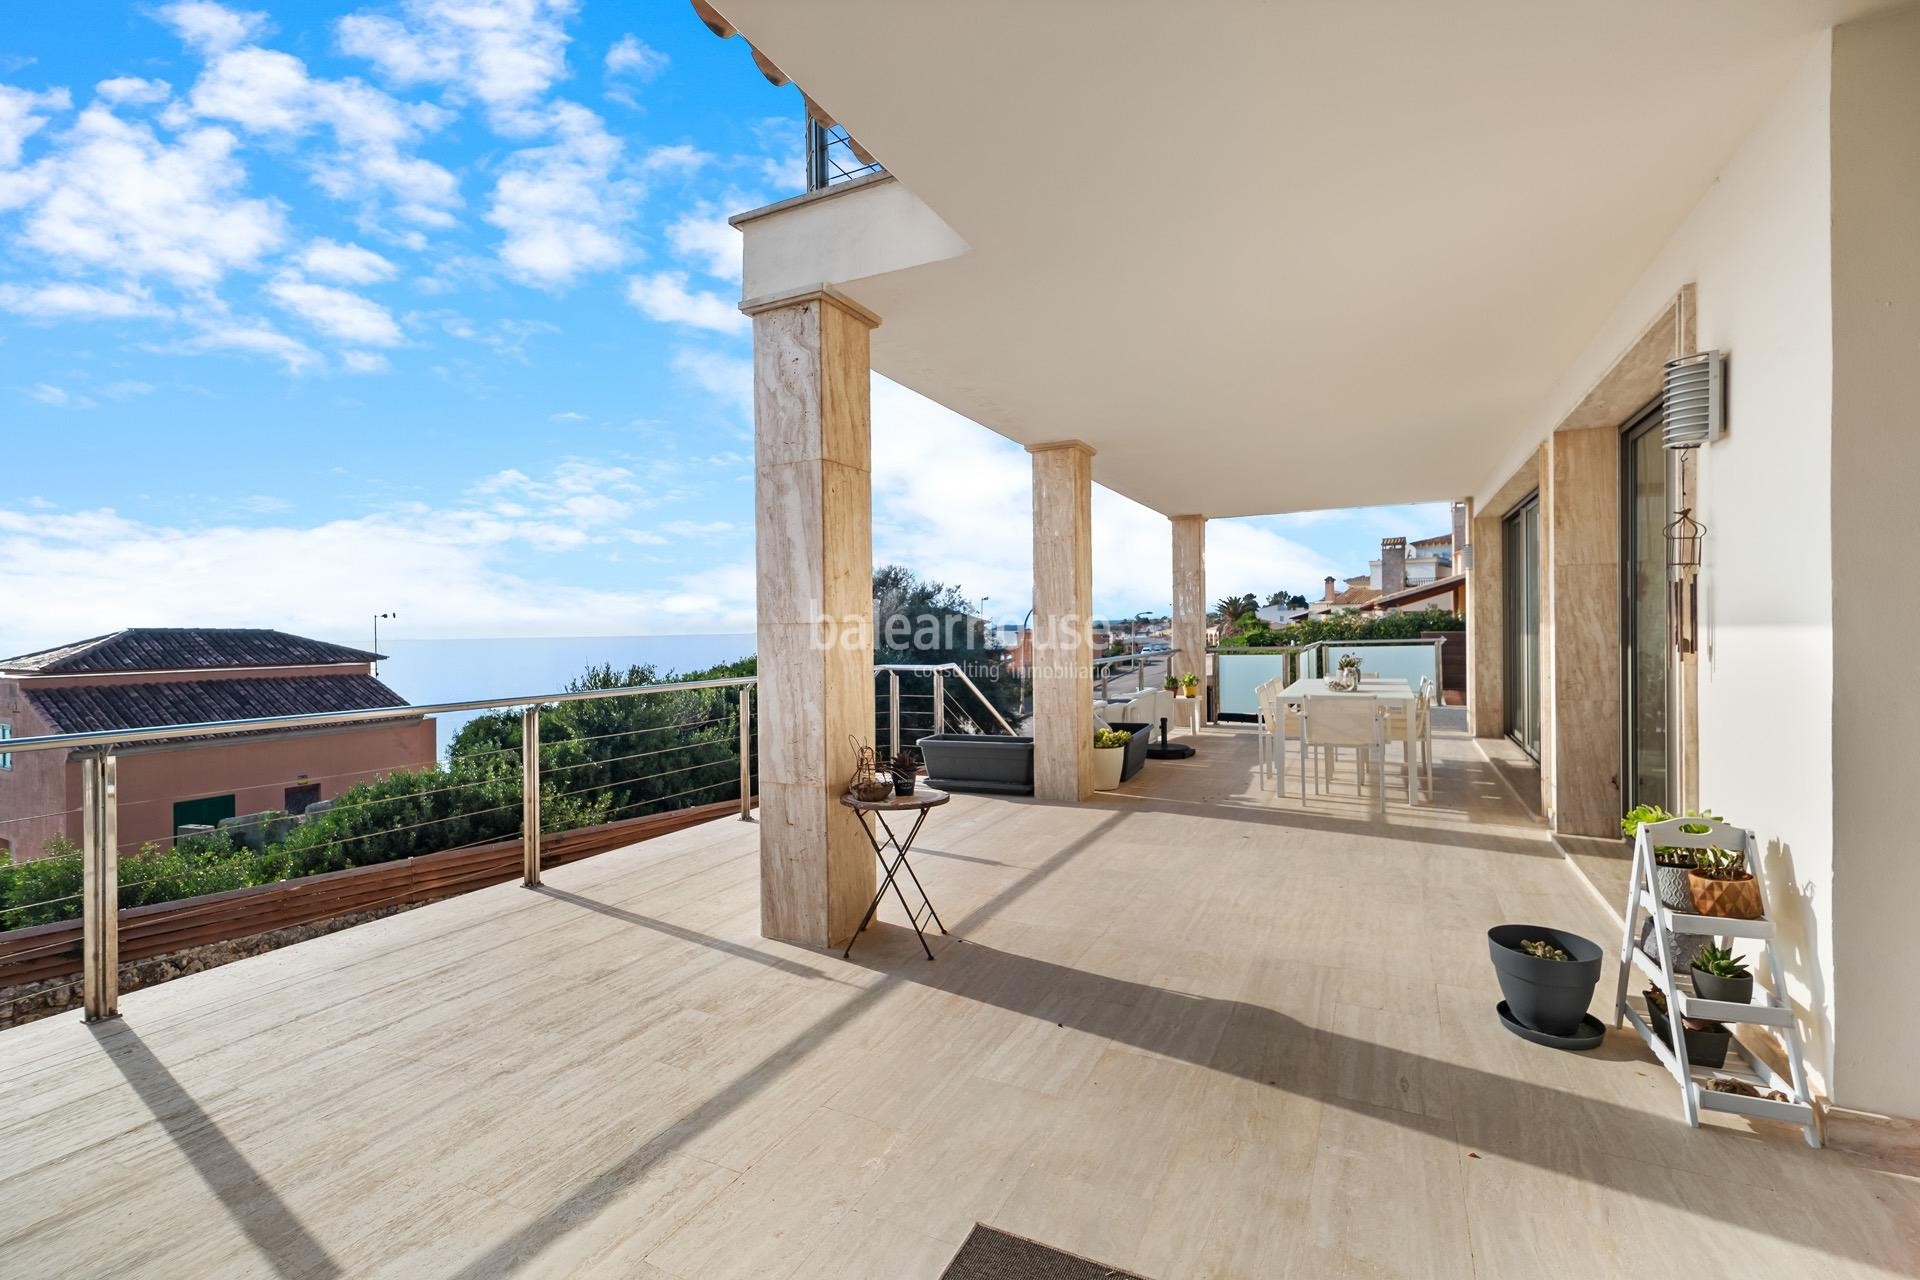 Extraordinary villas in Porto Cristo with stunning sea views next to beautiful coves